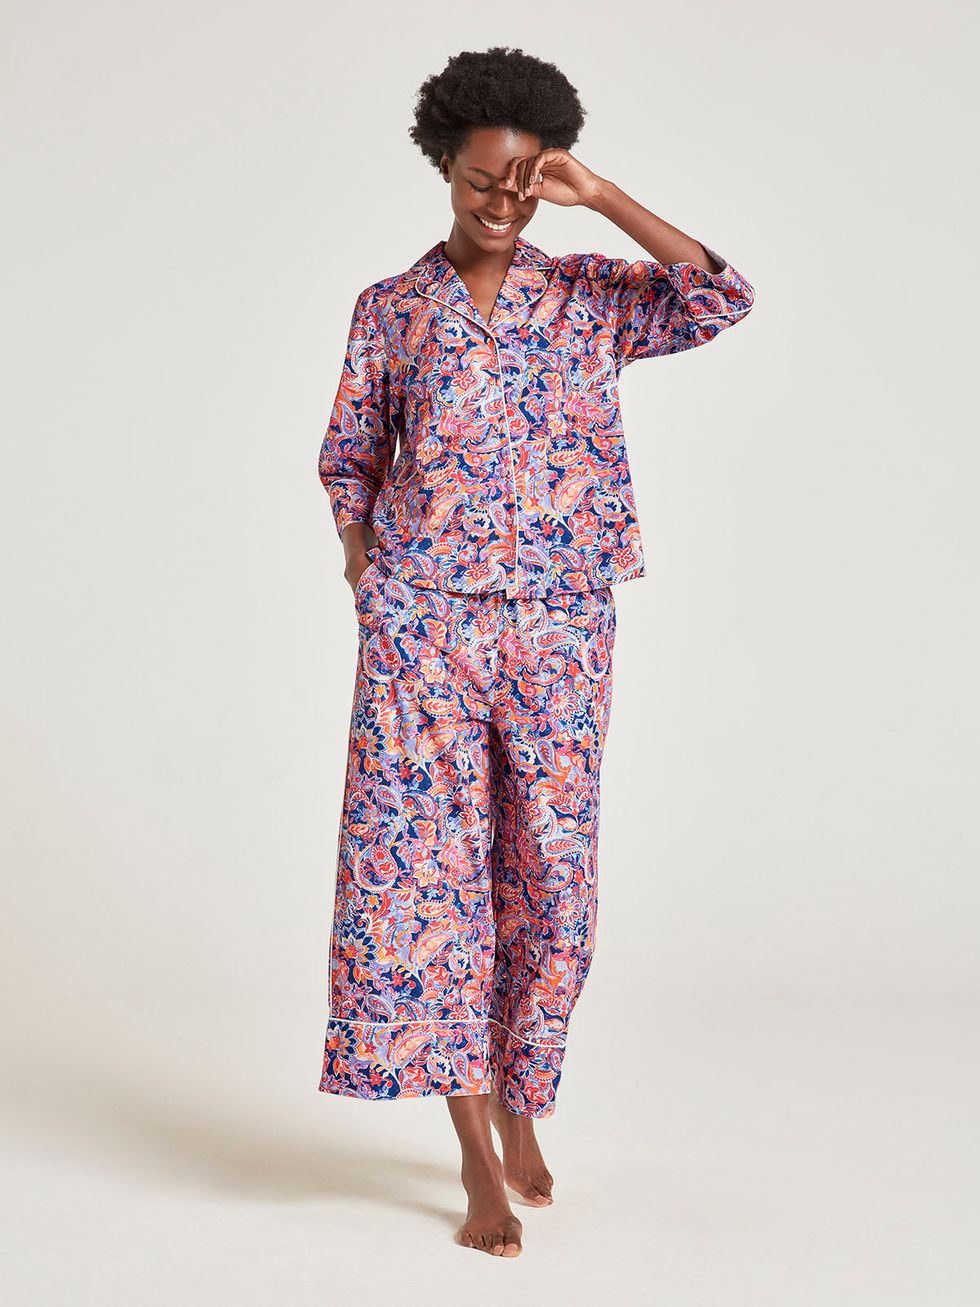 Cotton Women Pyjamas - Buy Cotton Women Pyjamas Online Starting at